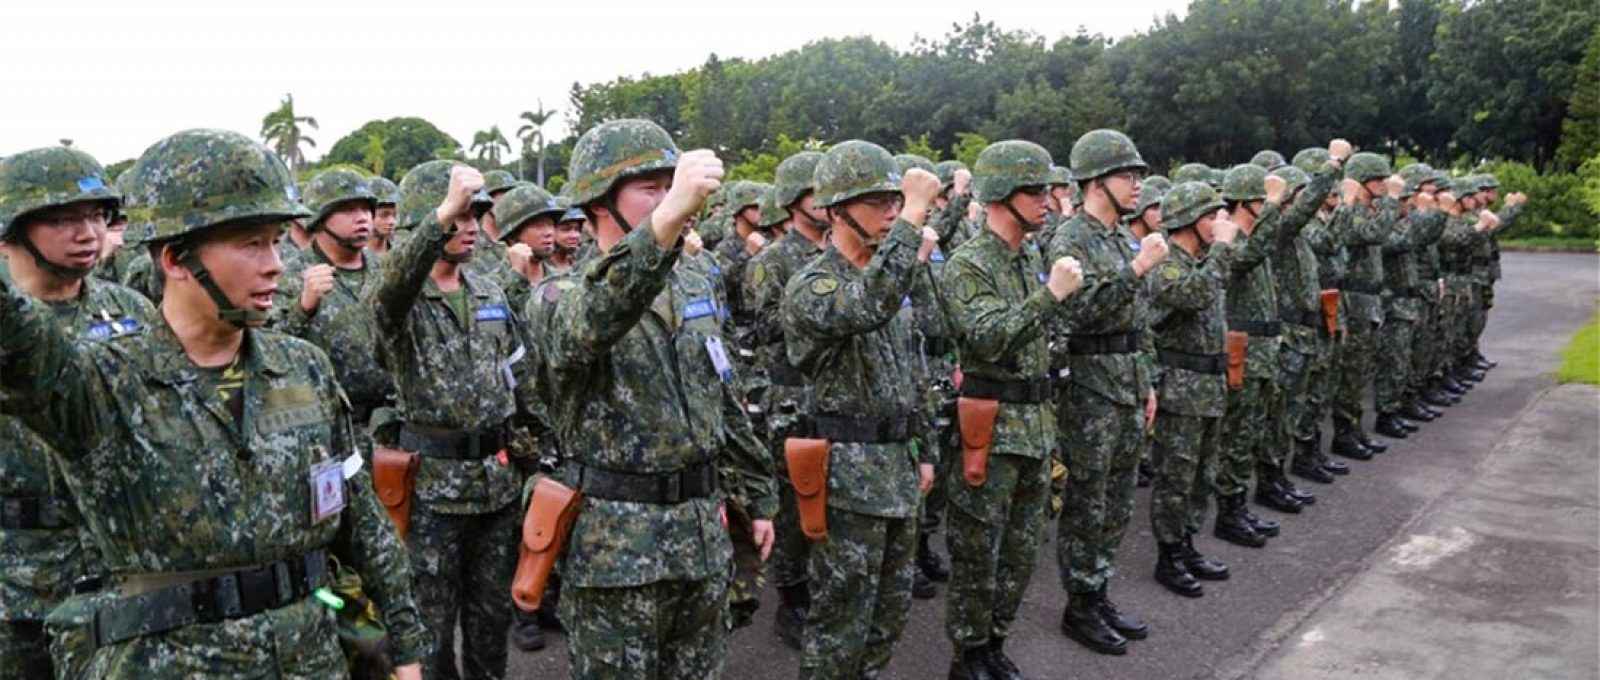 Reservistas participam de exercício anual de Han Kuang em 2016 (Foto: Exército de Taiwan).